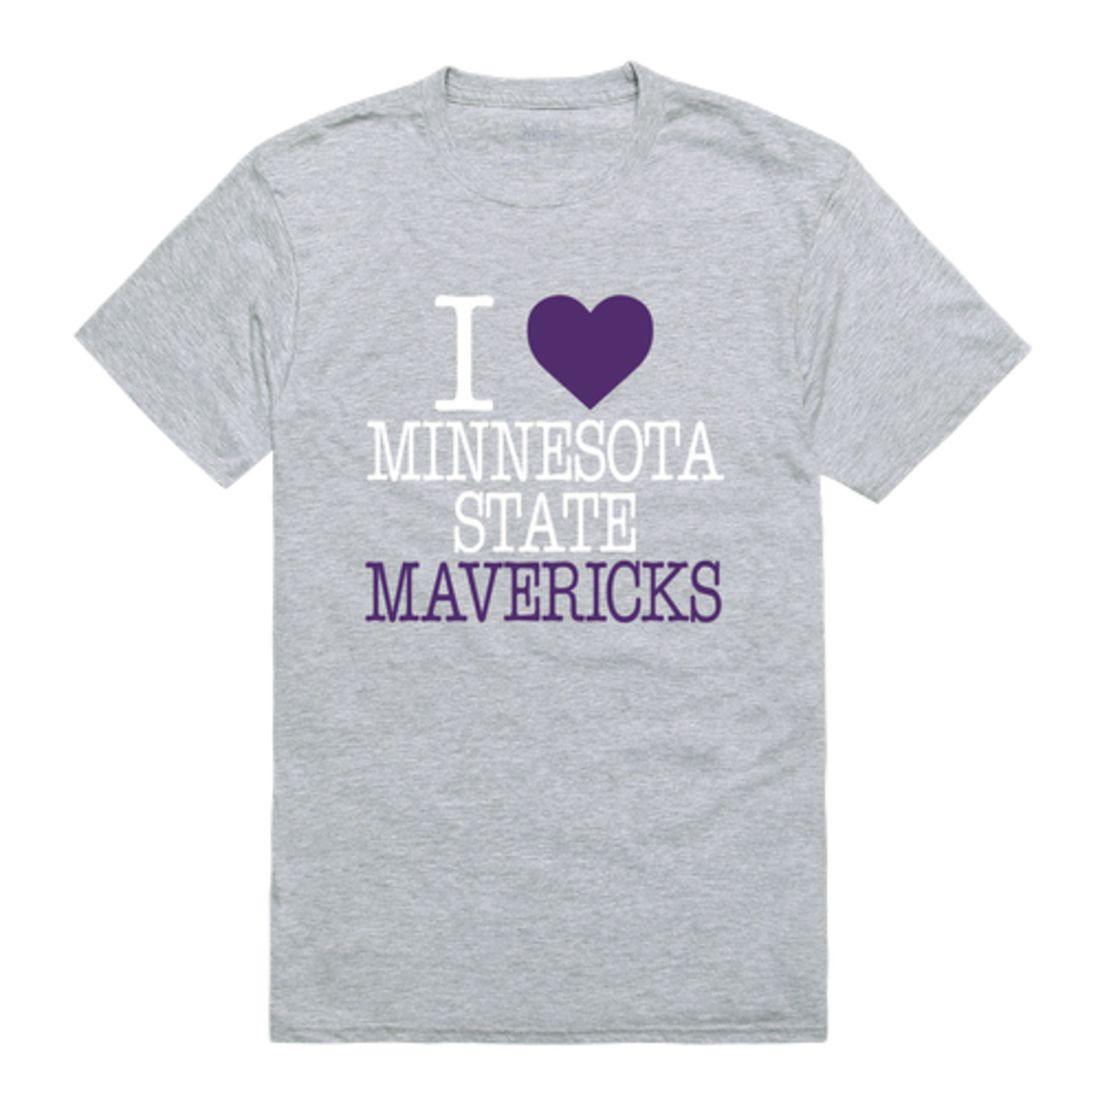 I Love MNSU Minnesota State University Mankato Mavericks T-Shirt-Campus-Wardrobe